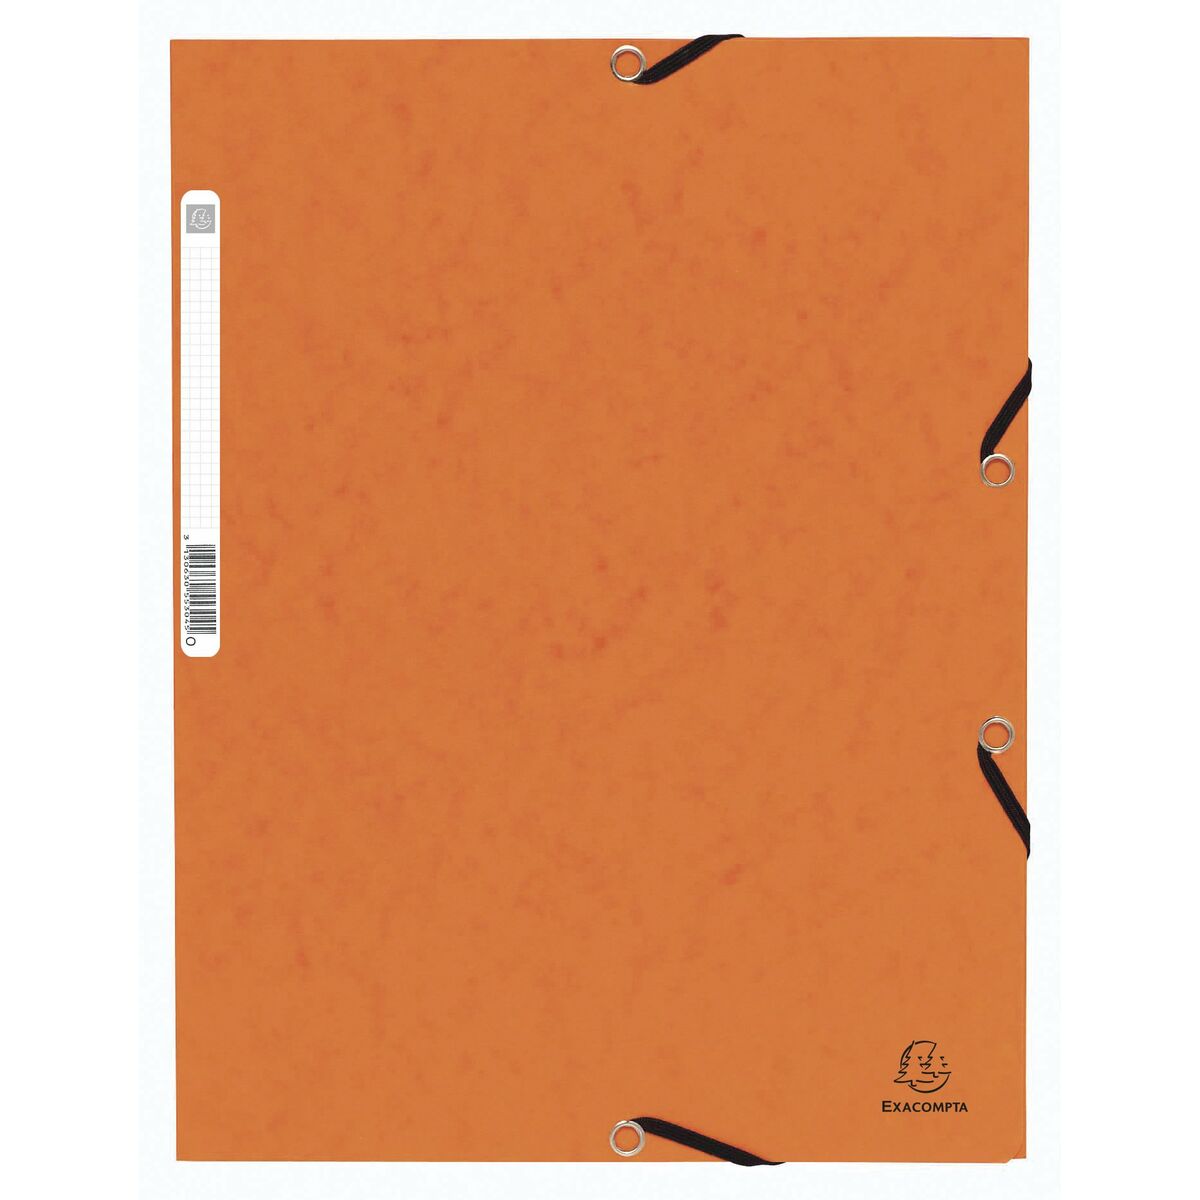 Dossier Exacompta Orange A4 (10 Unités)